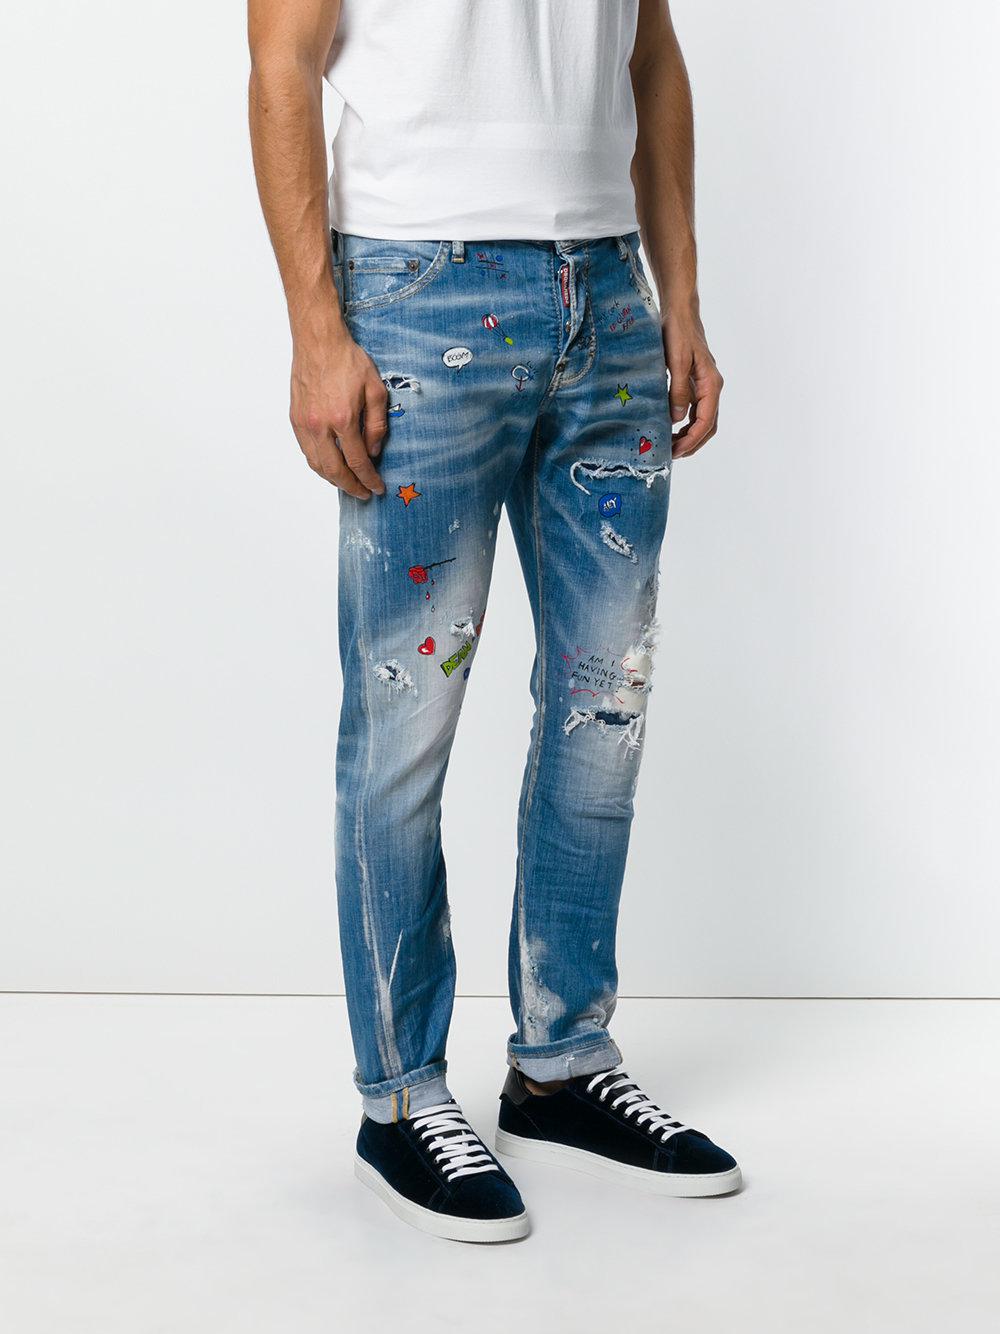 DSquared² Denim Sexy Twist Paint Splatter Jeans in Blue for Men - Lyst